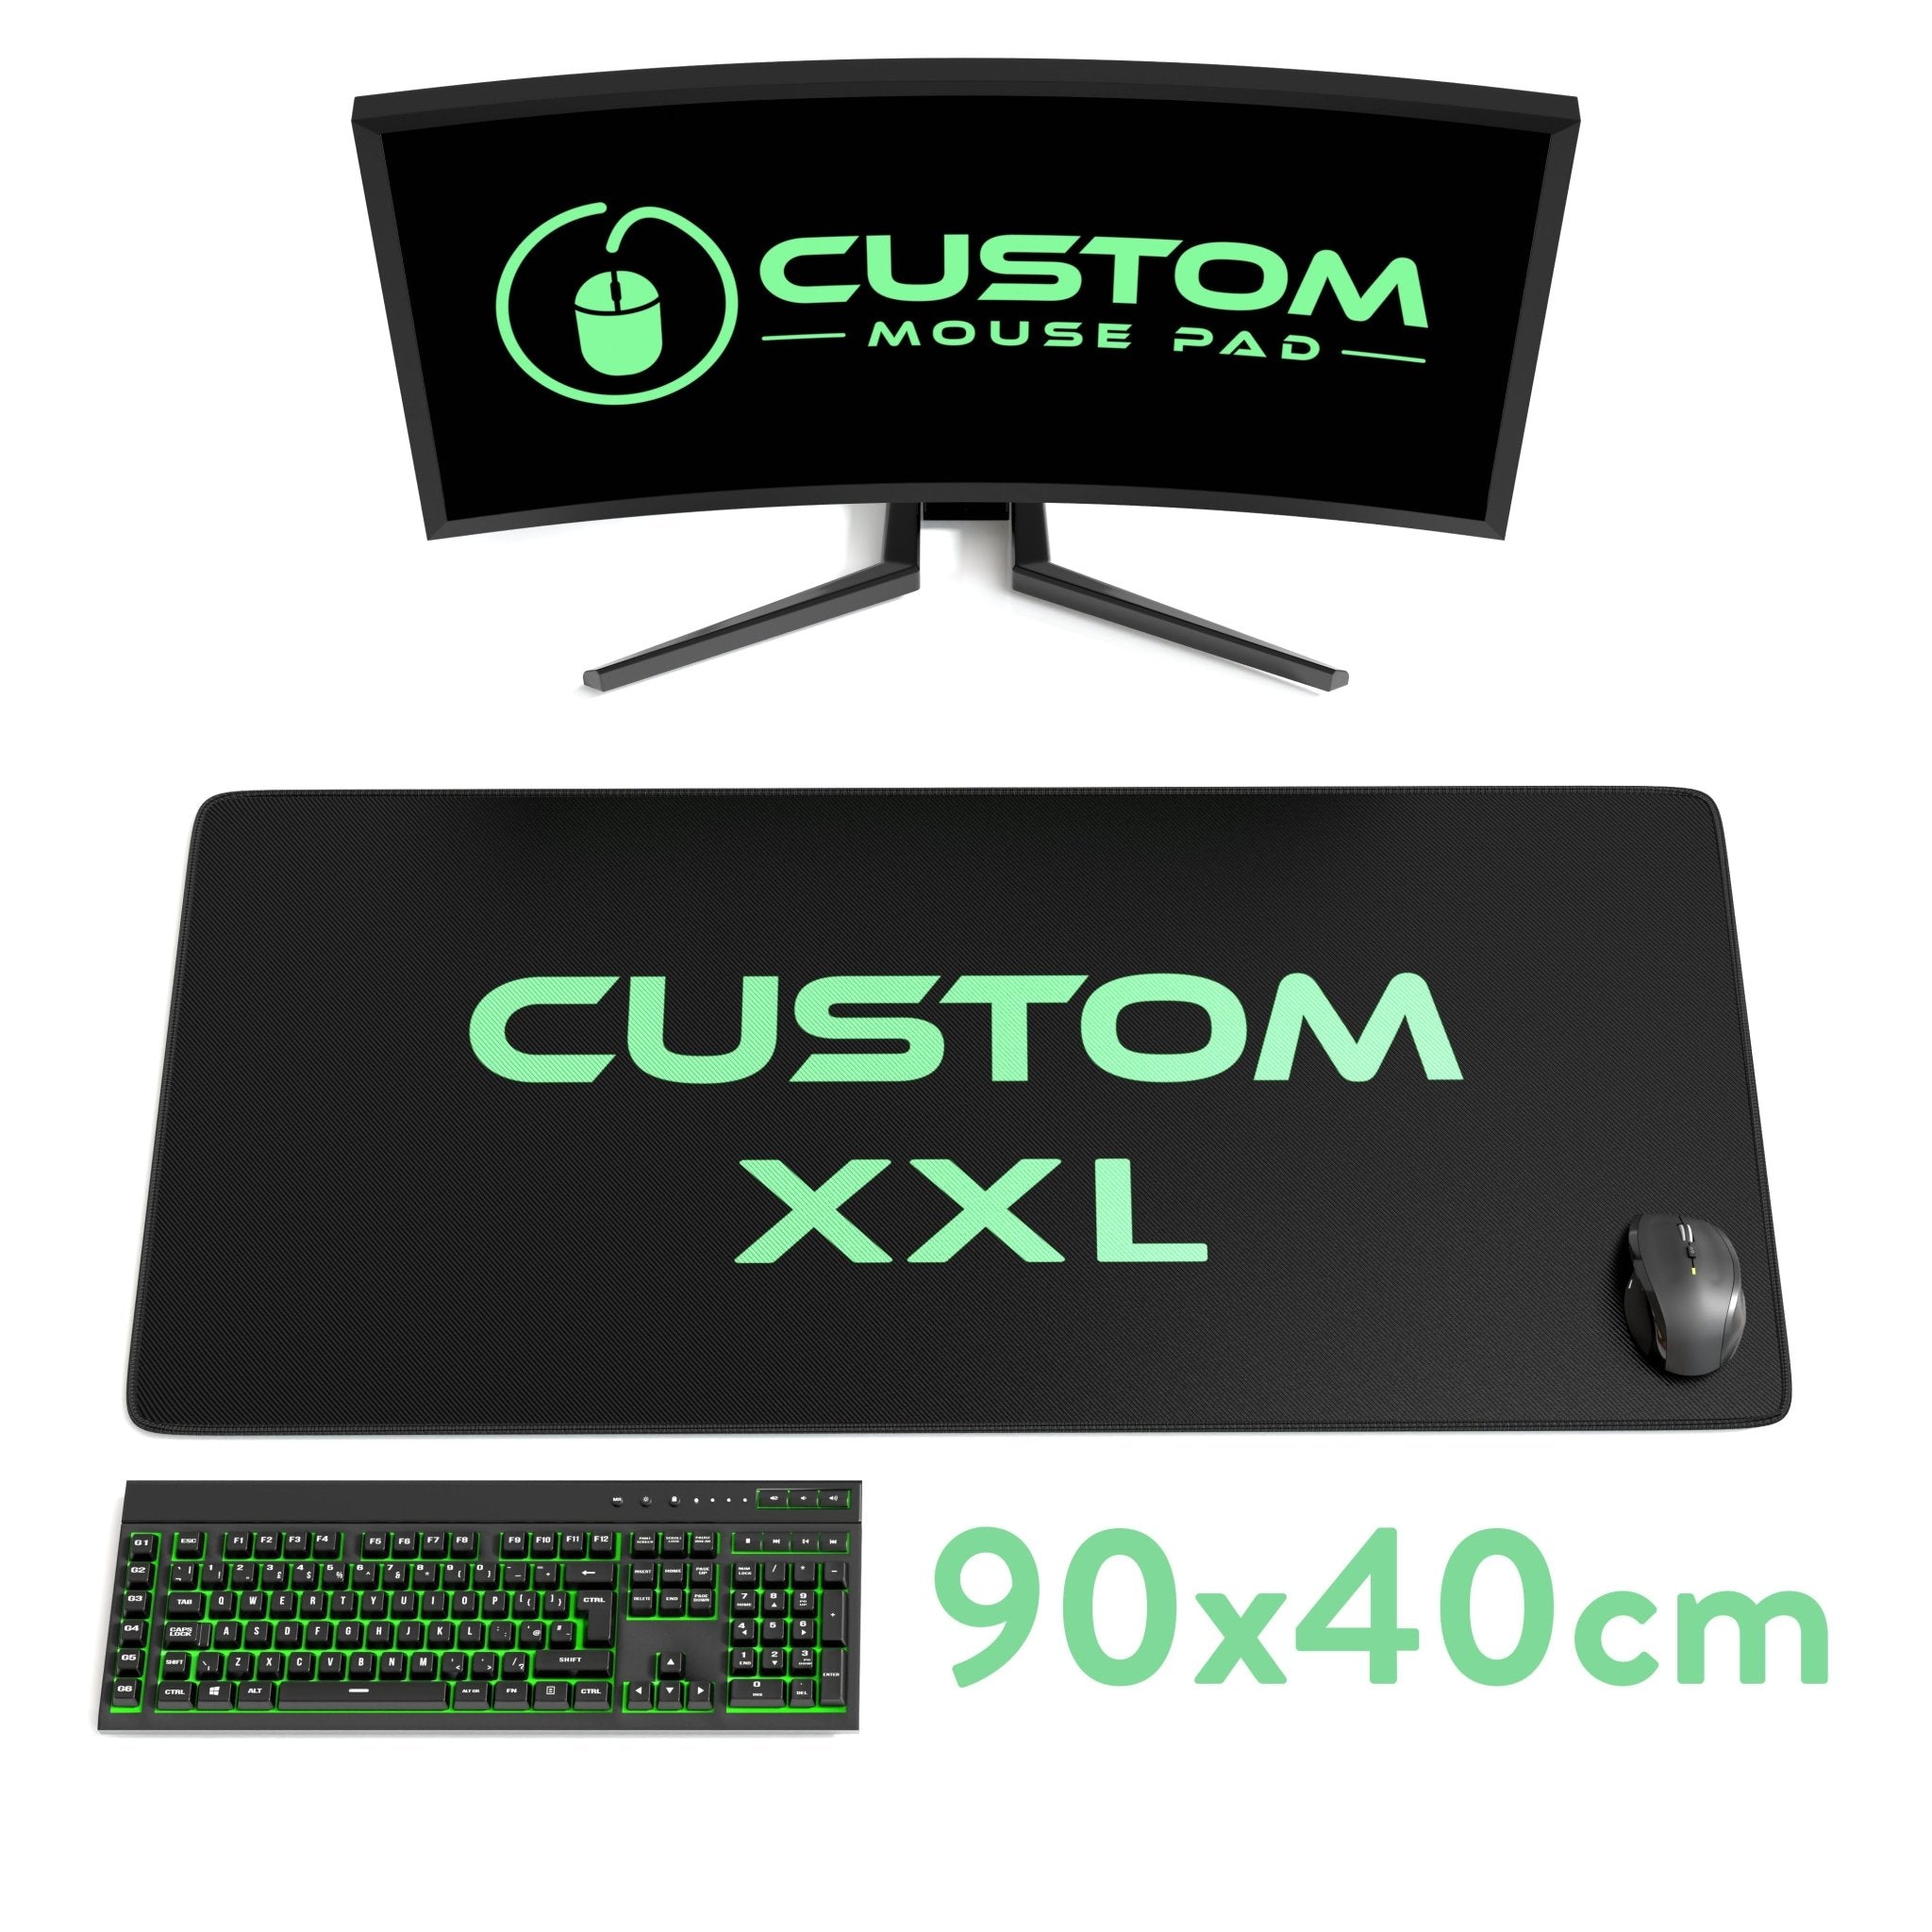 Custom Mouse Pad XXL, Upload Your Design